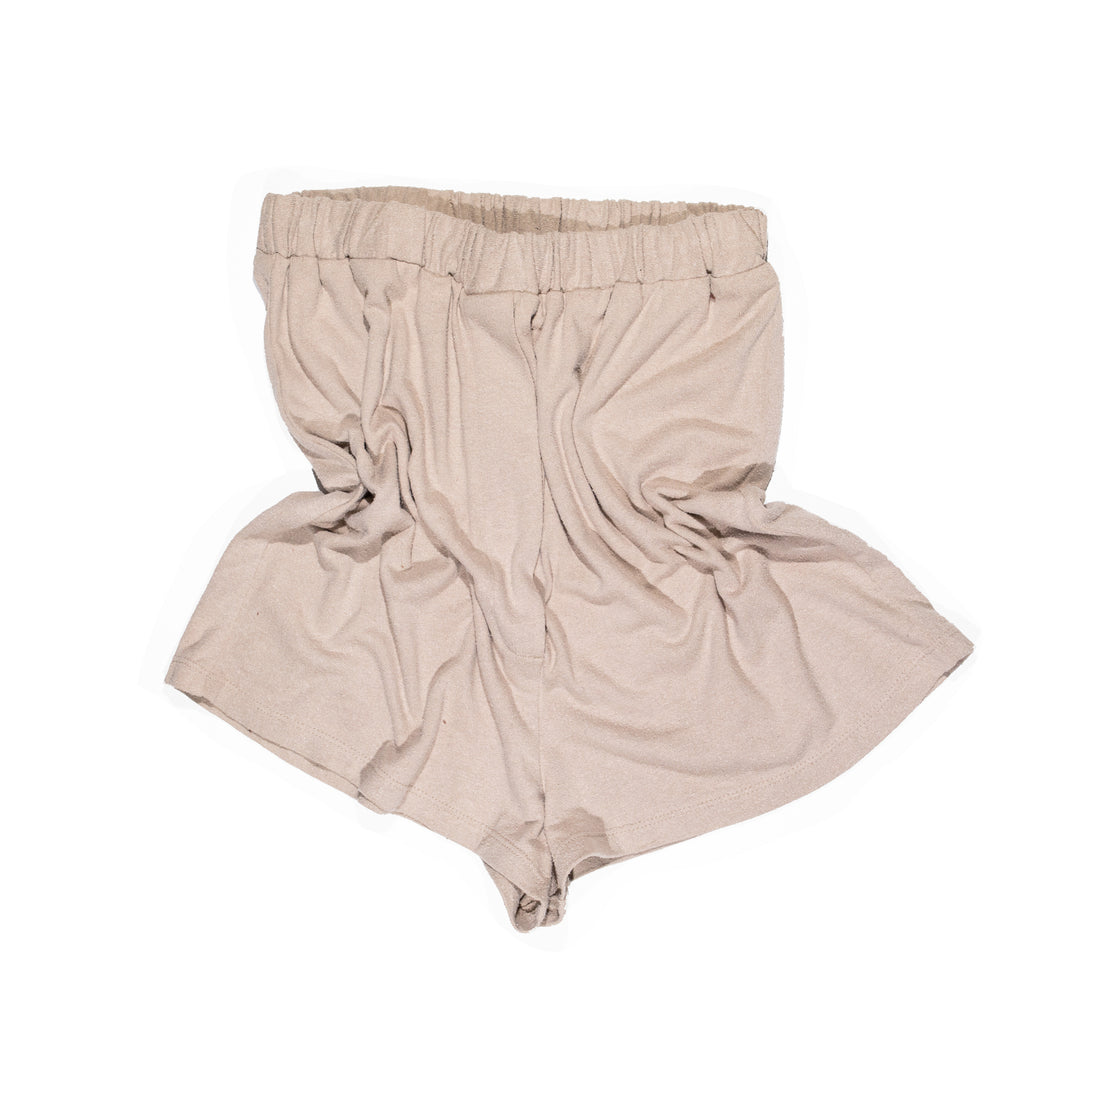 Baserange Domond Shorts in Acacia Brown